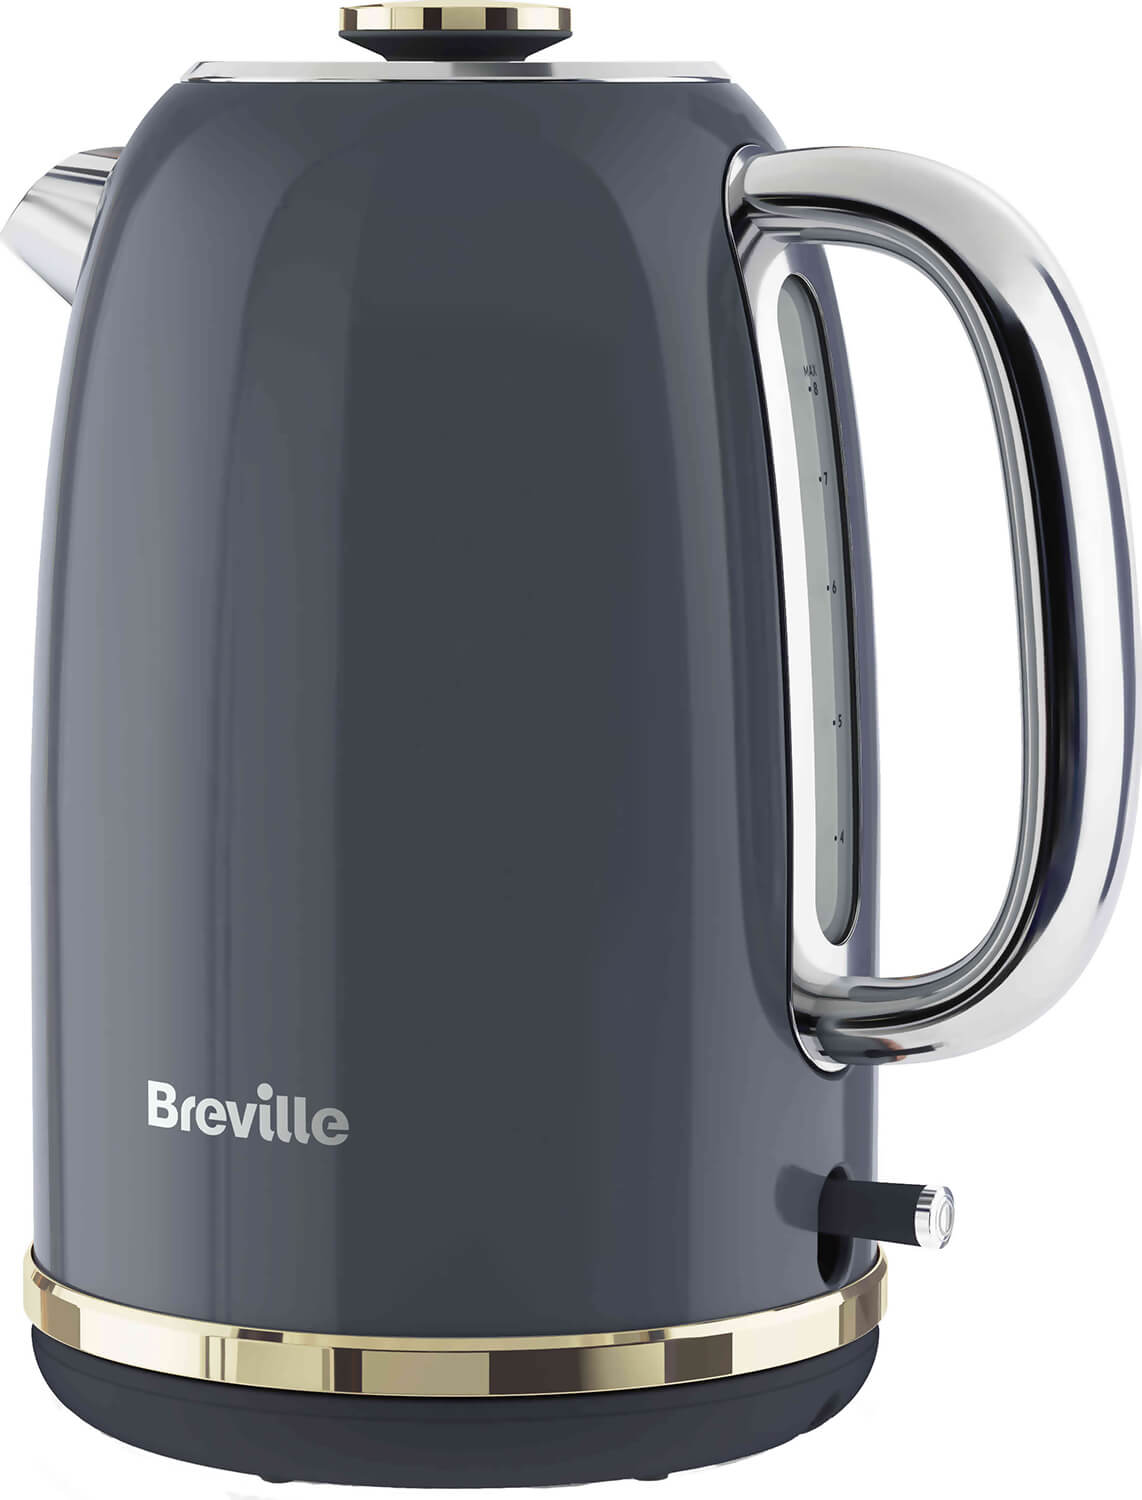 VKJ142-01 - BREVILLE Hot Cup VKJ142 One-cup Hot Water Dispenser - Black -  Currys Business